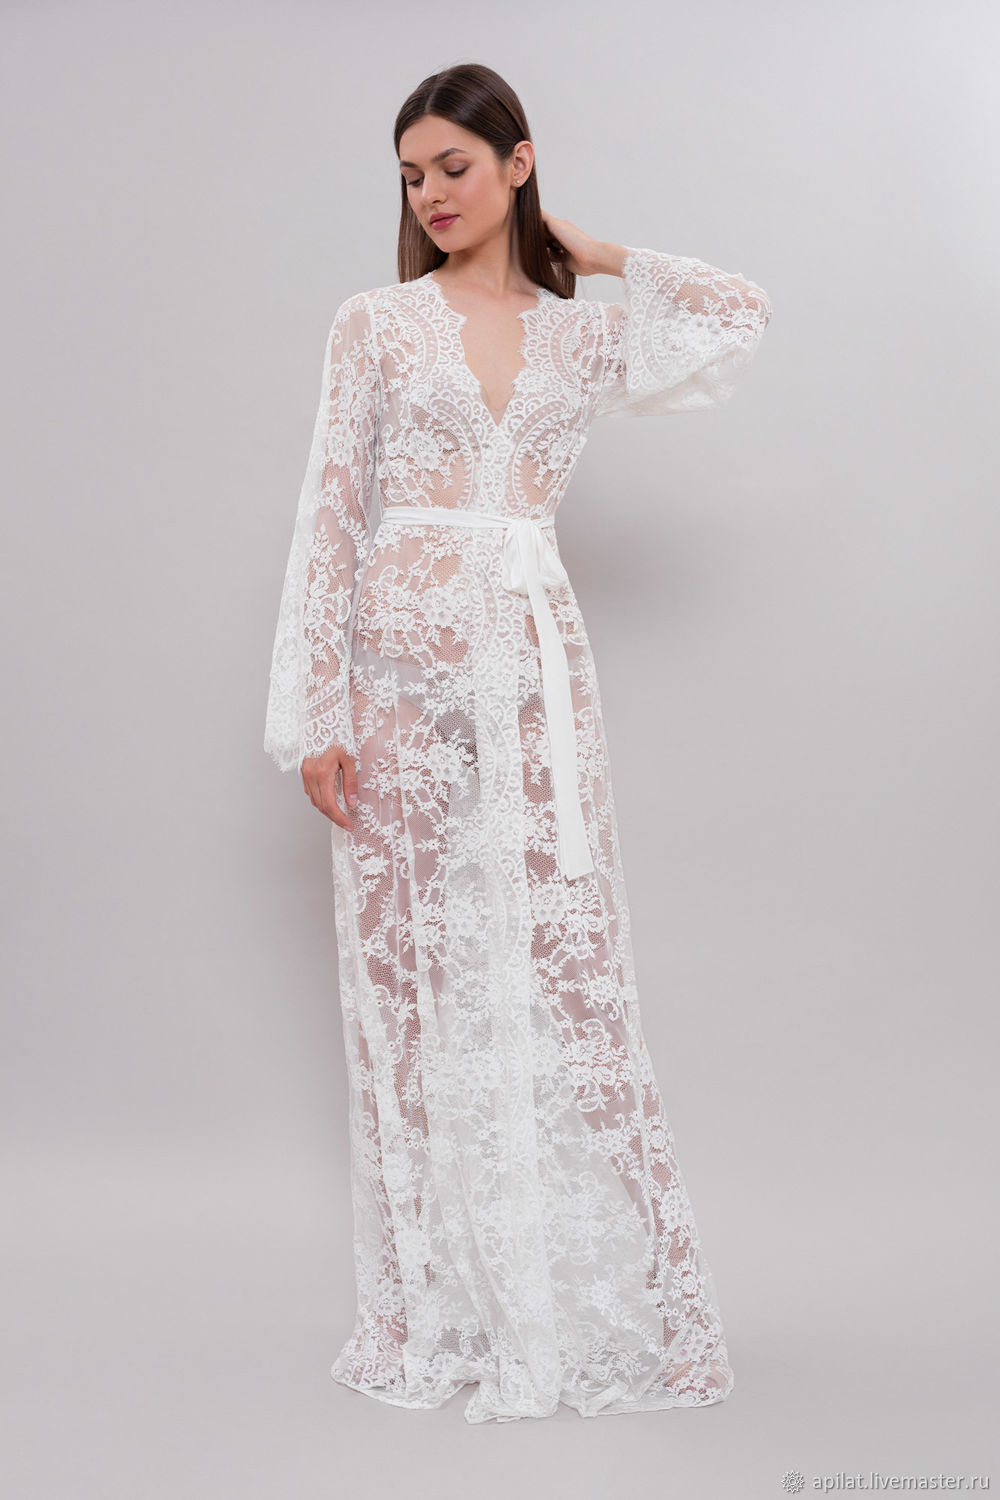 Lace Bridal Robe D4 Ivory Lace Robe Long Bridal Robe Long Sleeve в интернет магазине на